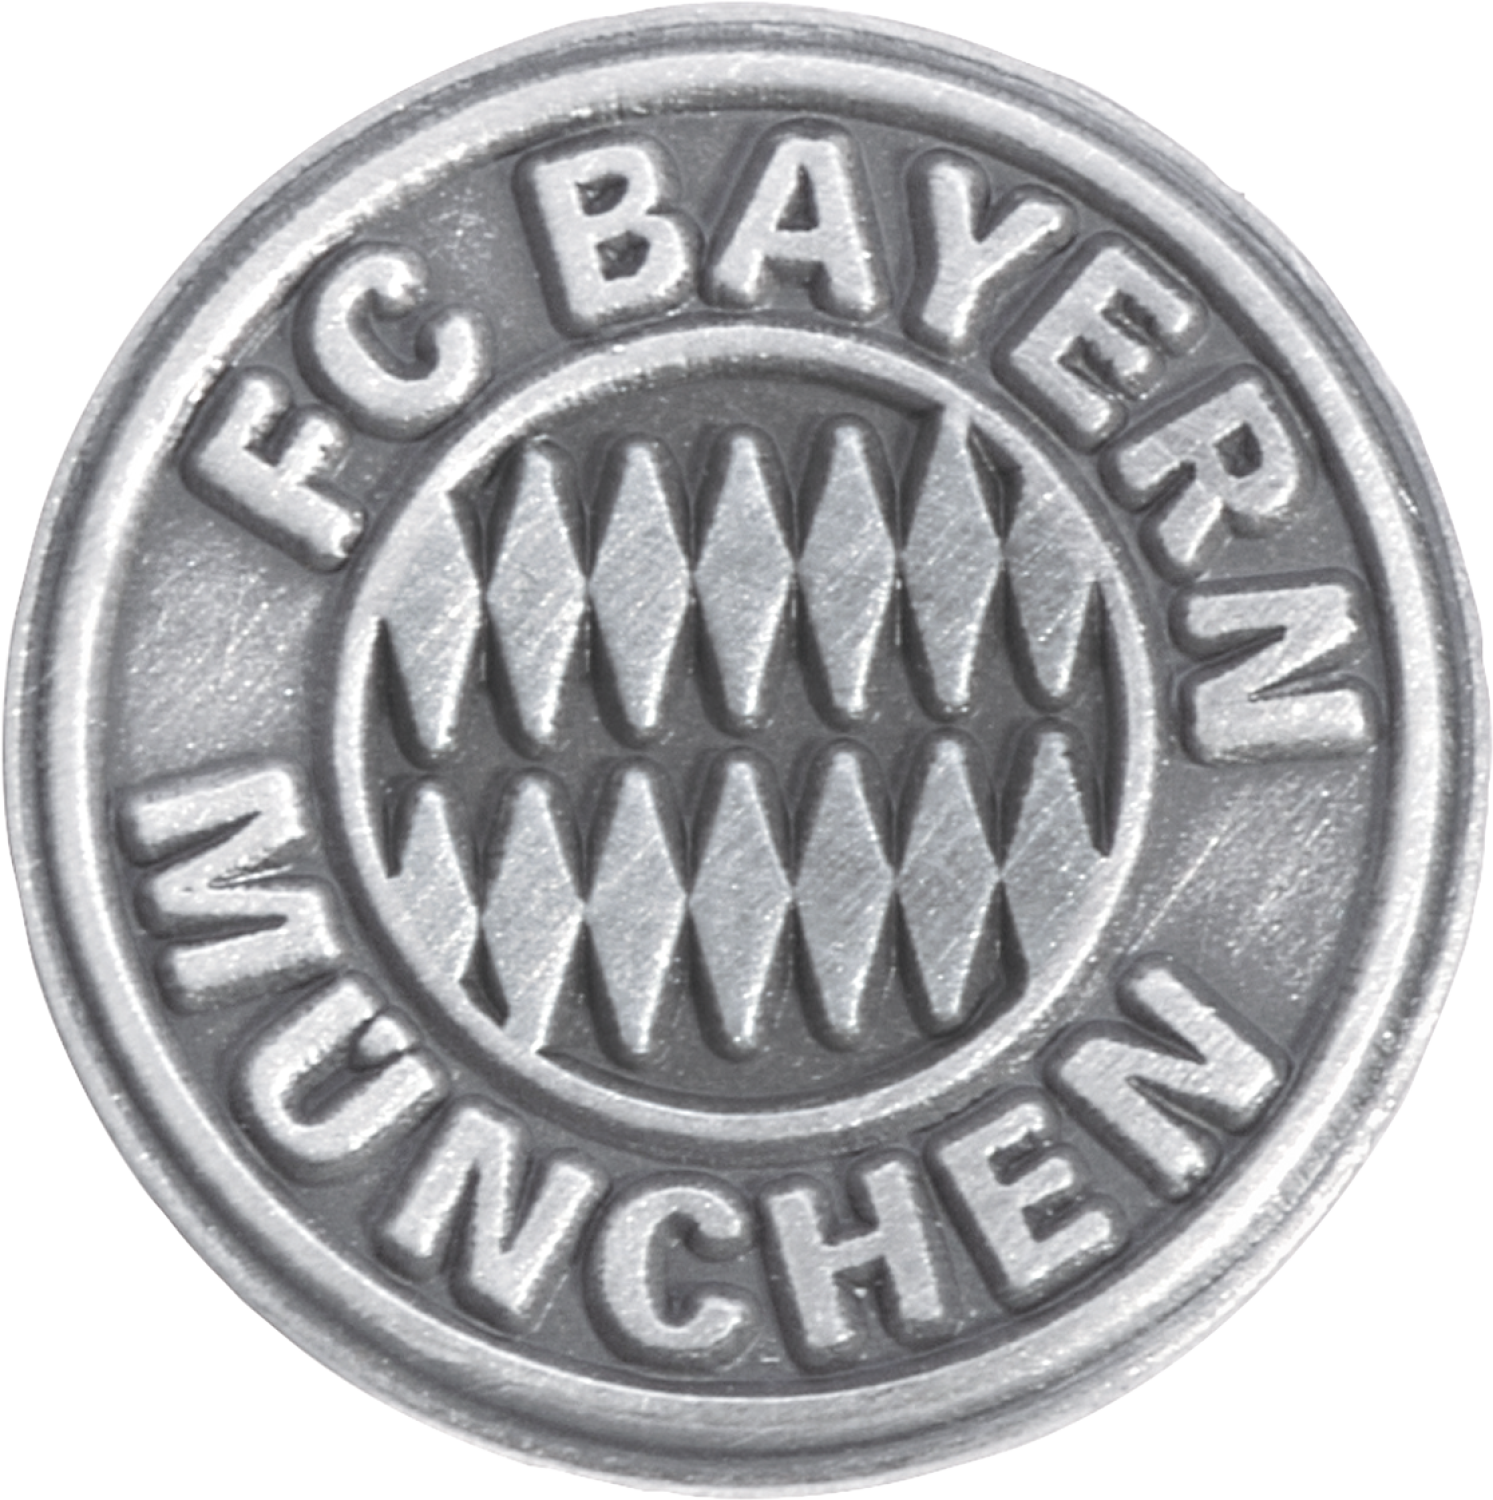 Download Fc Bayern Munchen Emblem Silver Pin Badge Dream League Soccer 18 Bayern Munich Logo Png Image With No Background Pngkey Com